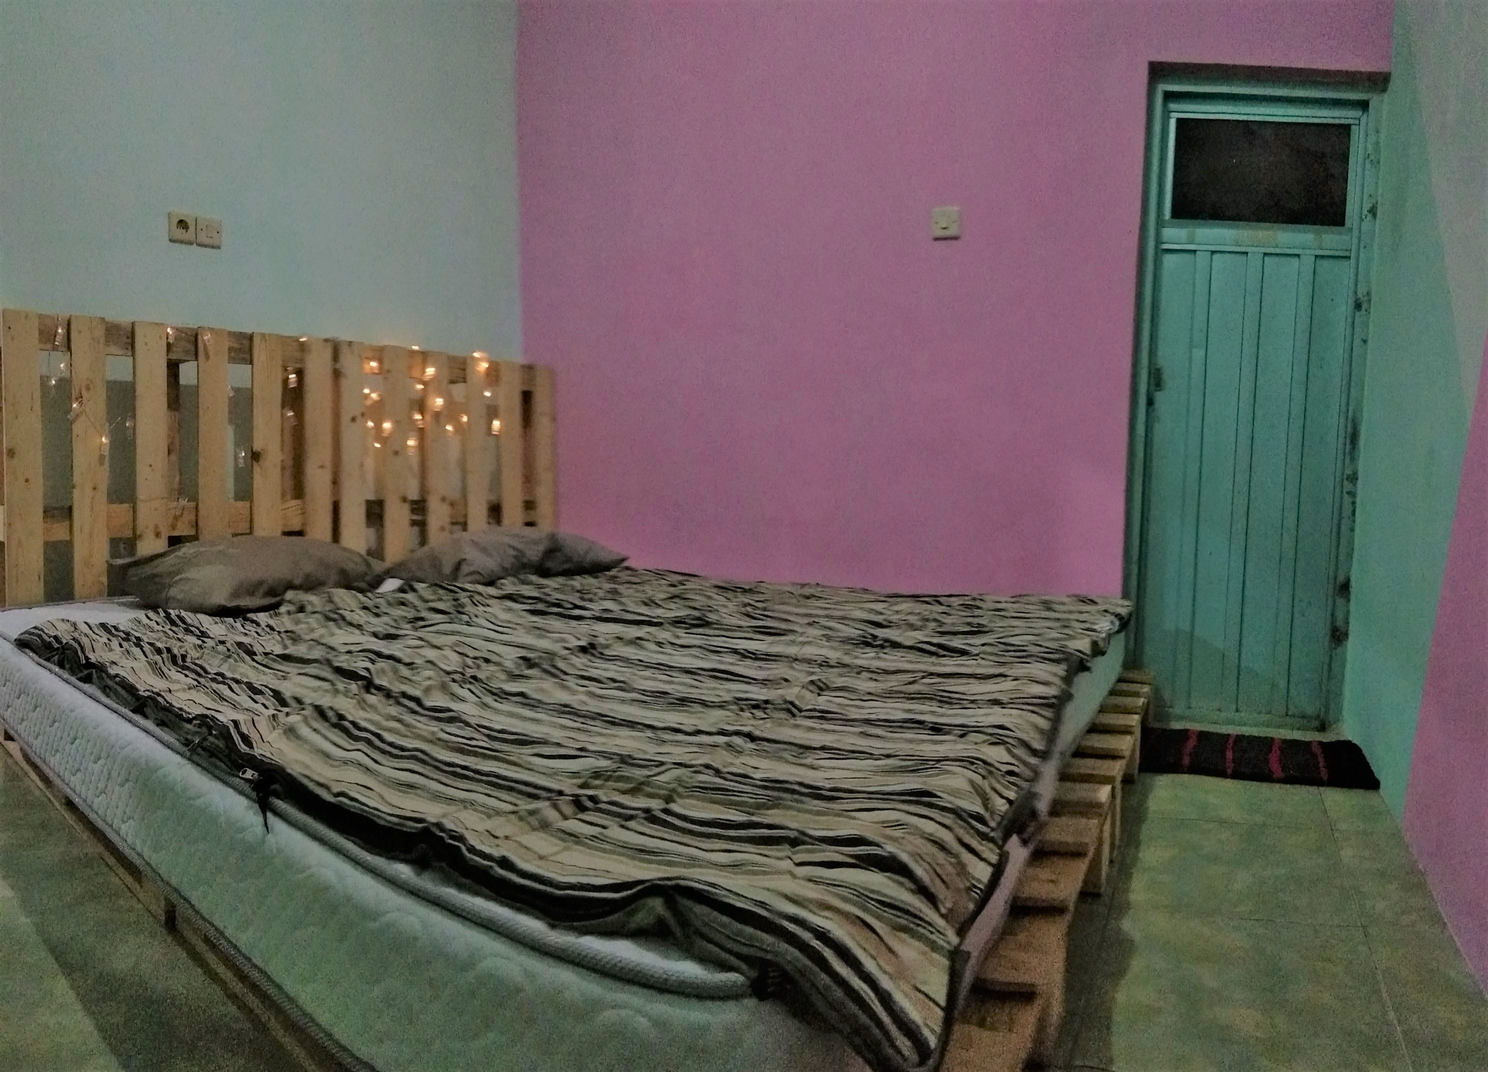 Bedroom 2, Happy Volcano Backpacker Dormitory - Hostel, Probolinggo